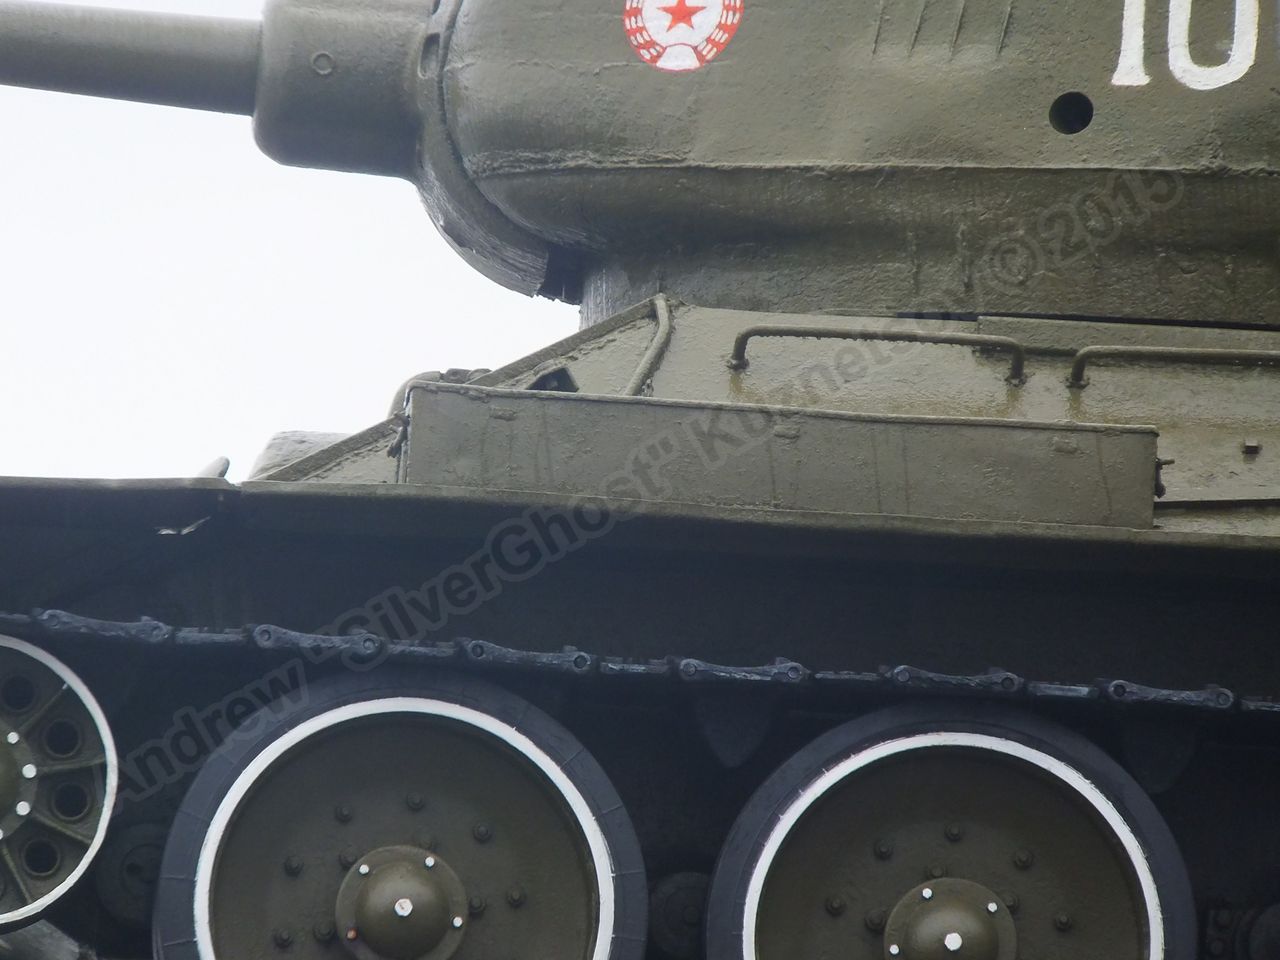 T-34-85_0026.jpg